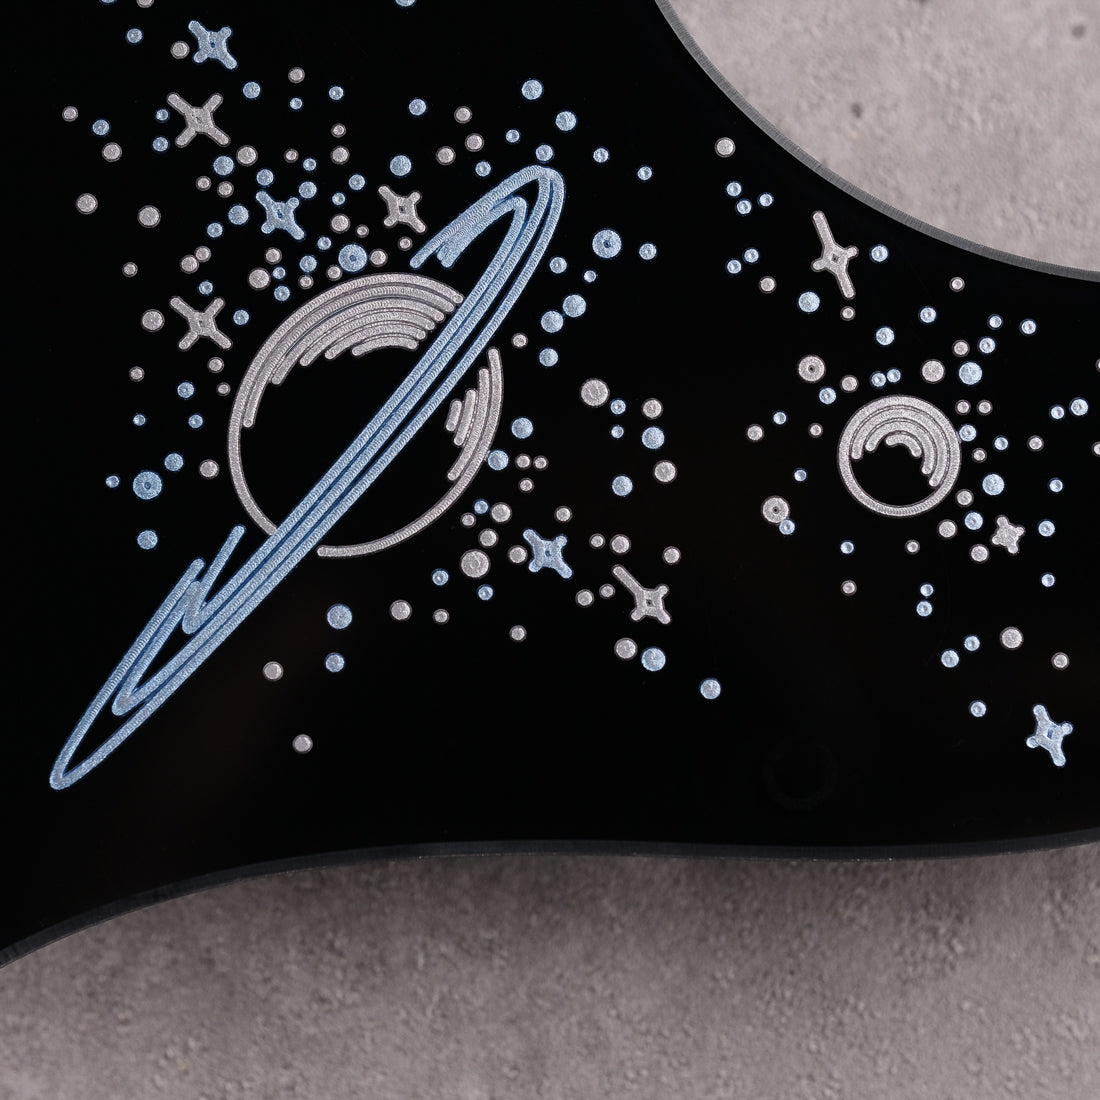 Space Oddity - Cabronita Especial Pickguard - on Black Plexi